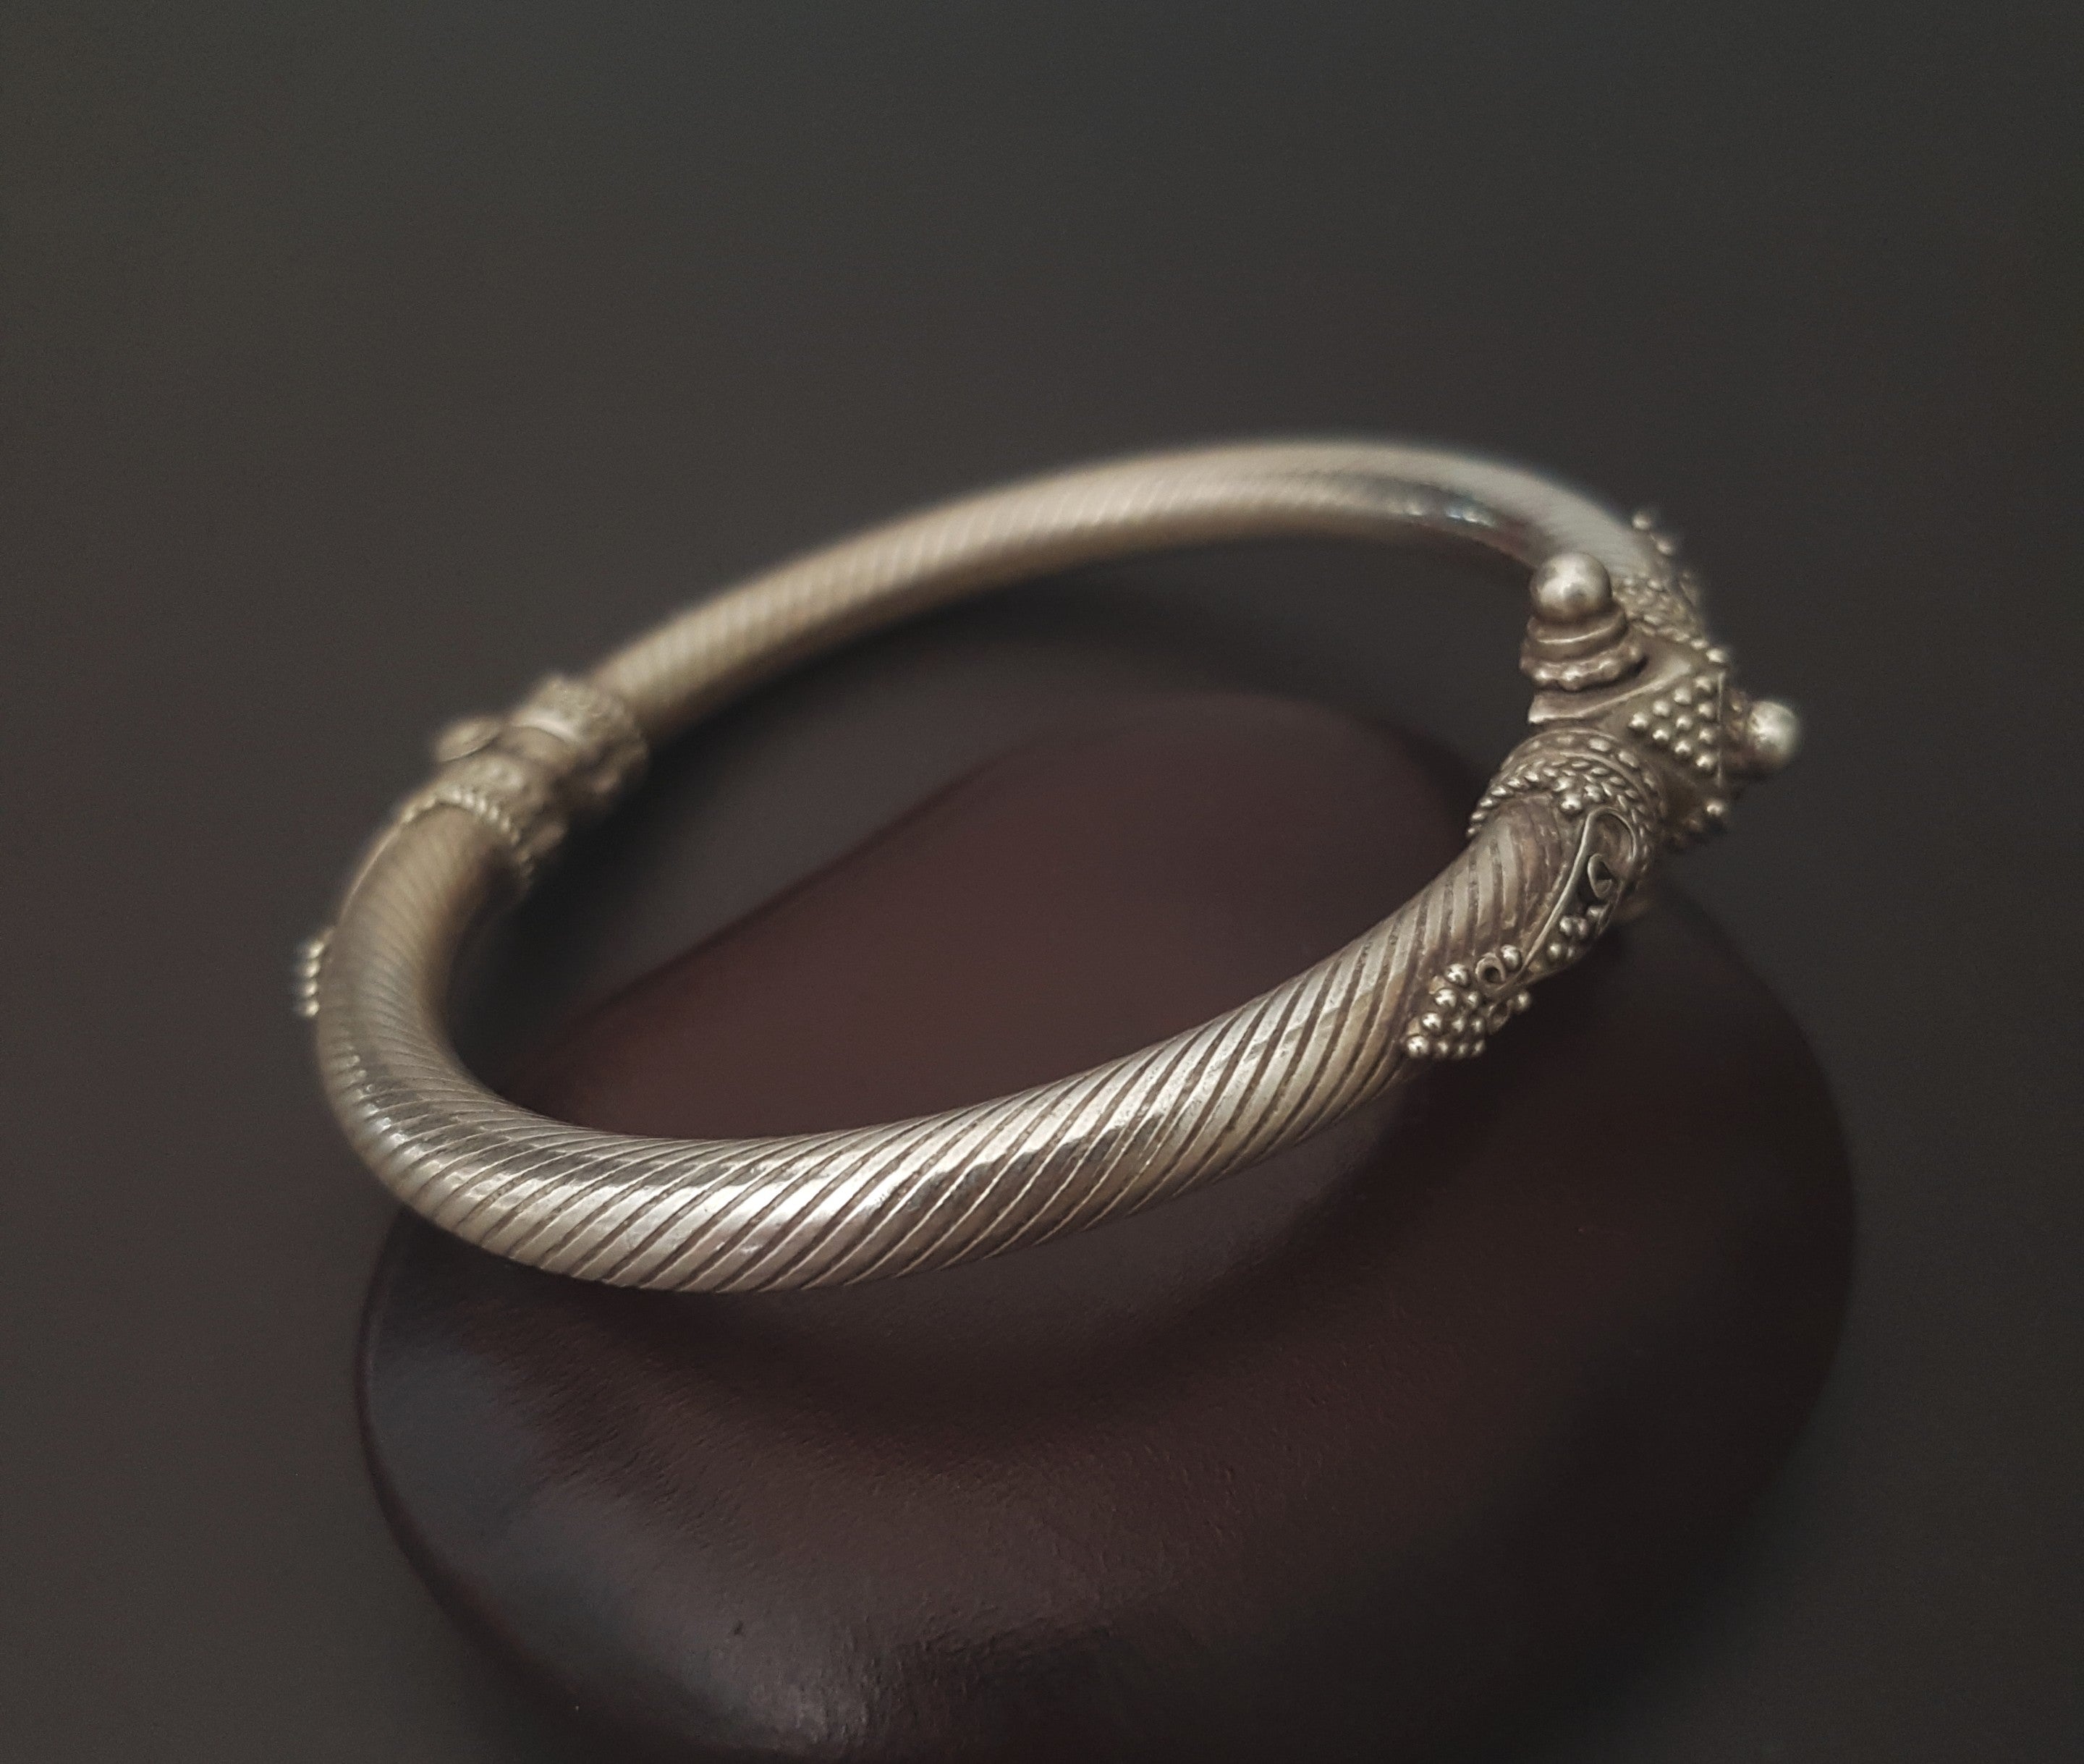 Ethnic Indian Silver Bracelet - Hinged